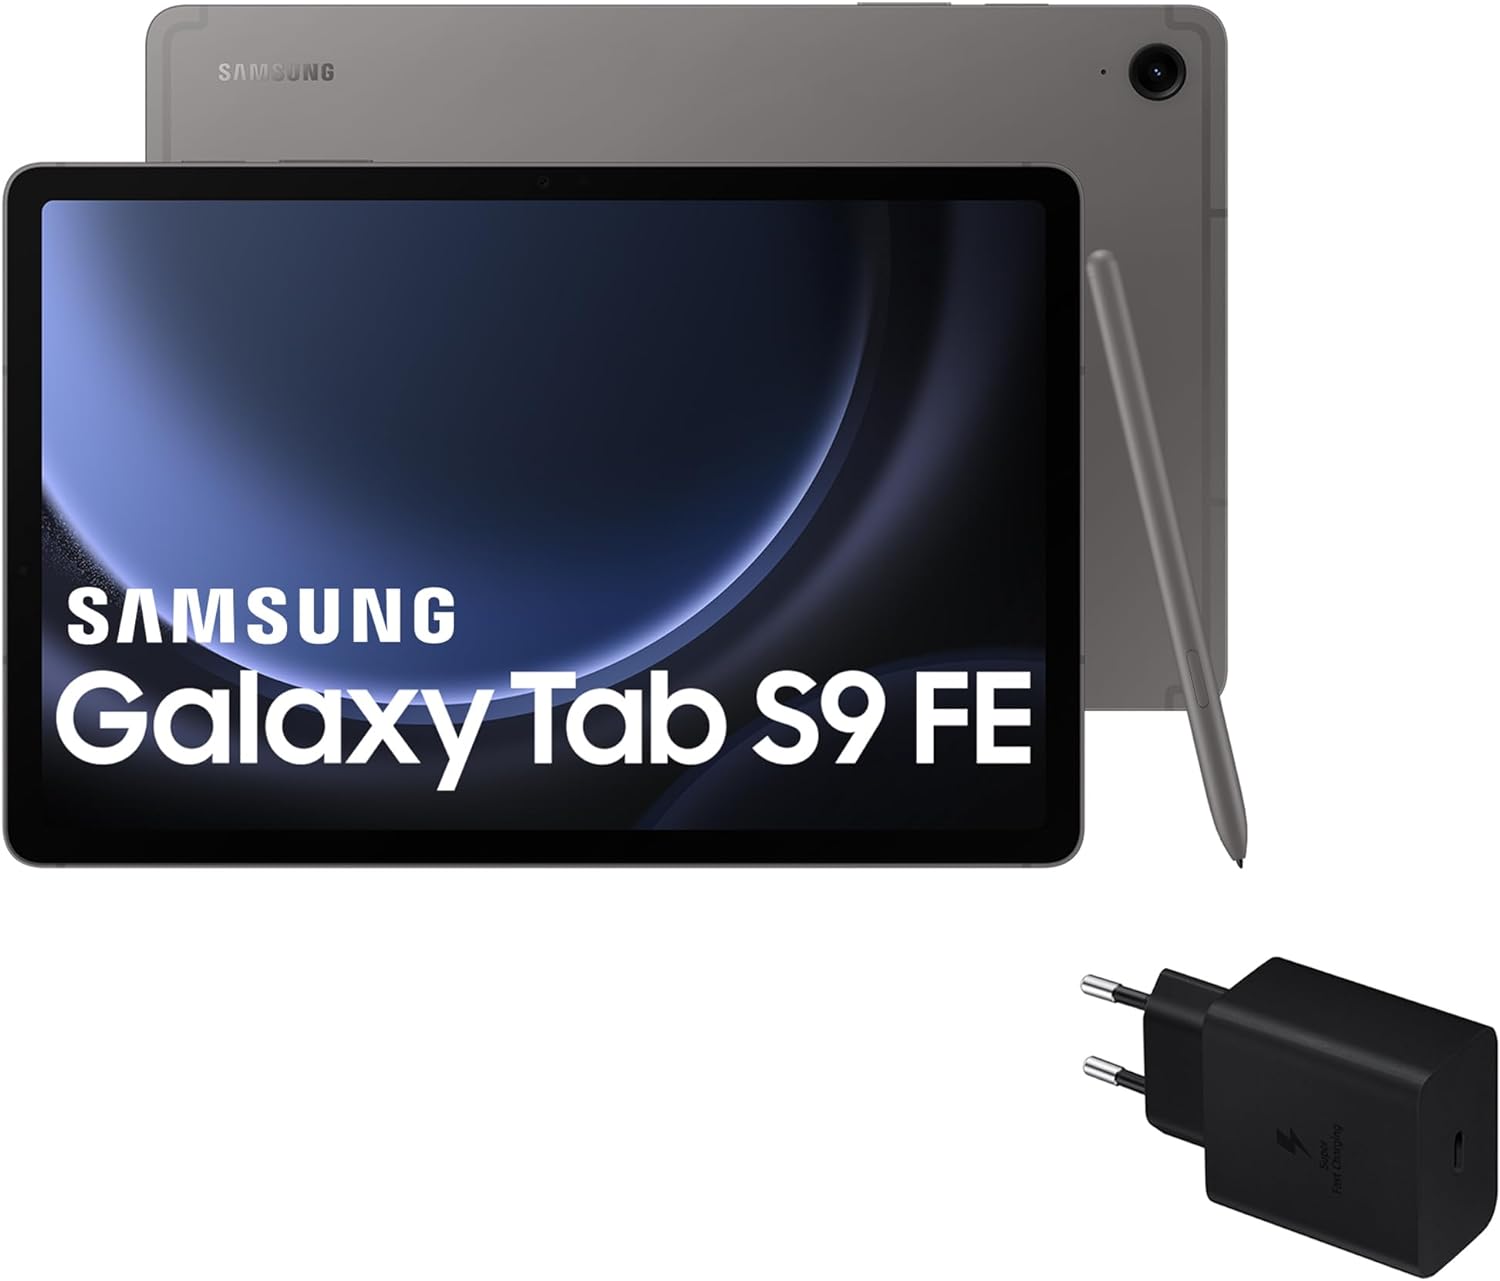 Samsung Galaxy Tab S9 FE vs. Samsung Galaxy Tab S9 FE+